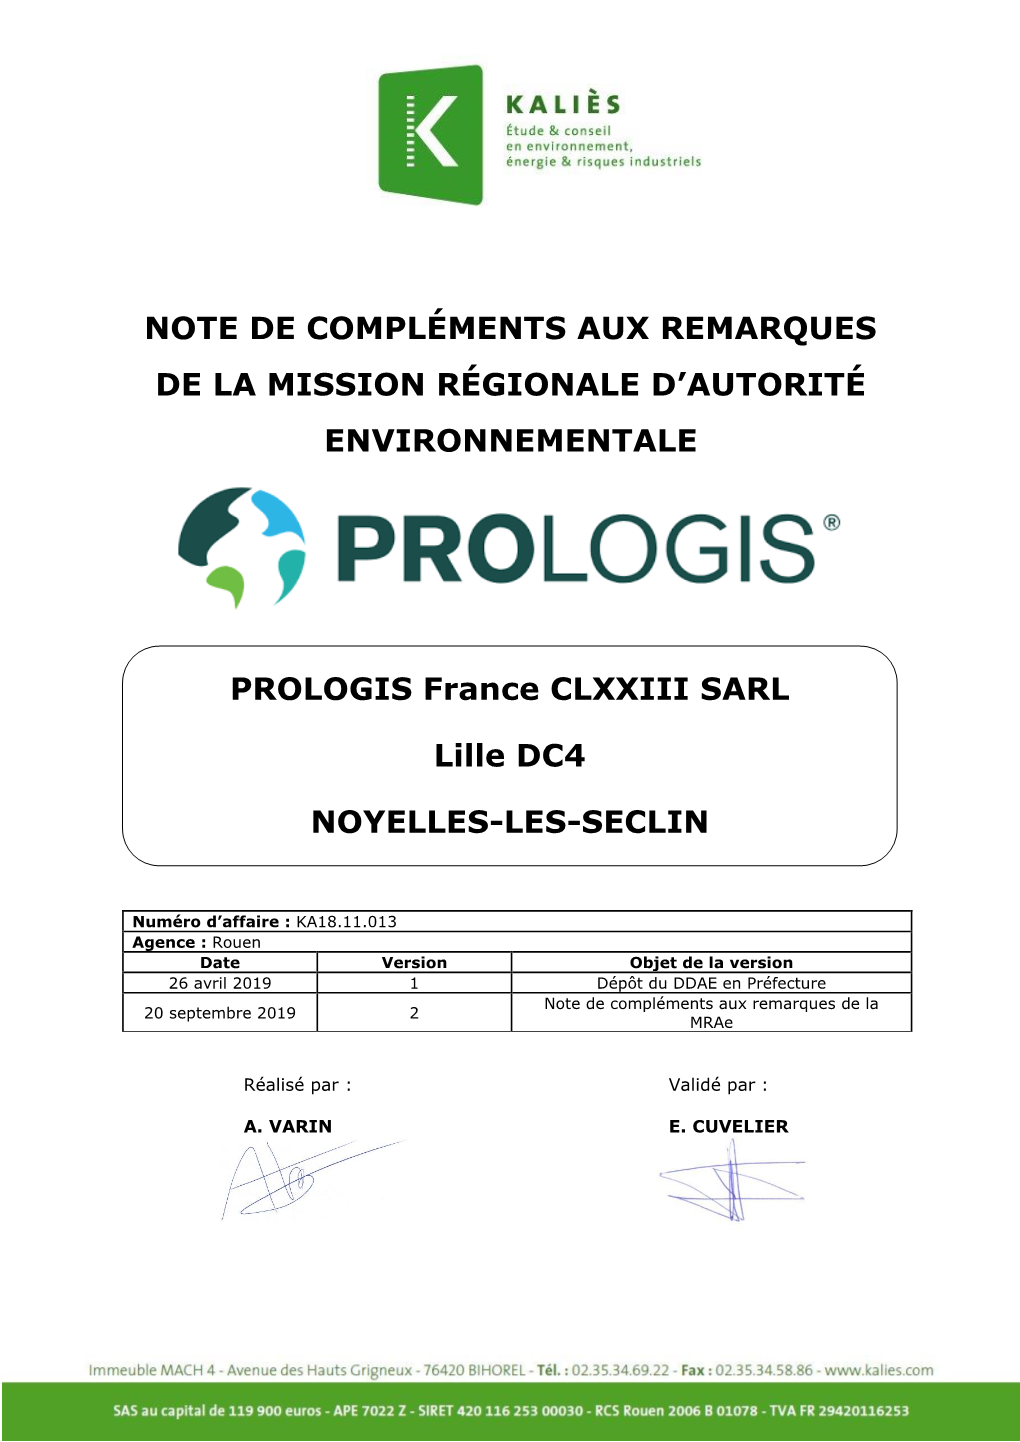 PROLOGIS France CLXXIII SARL Lille DC4 NOYELLES-LES-SECLIN